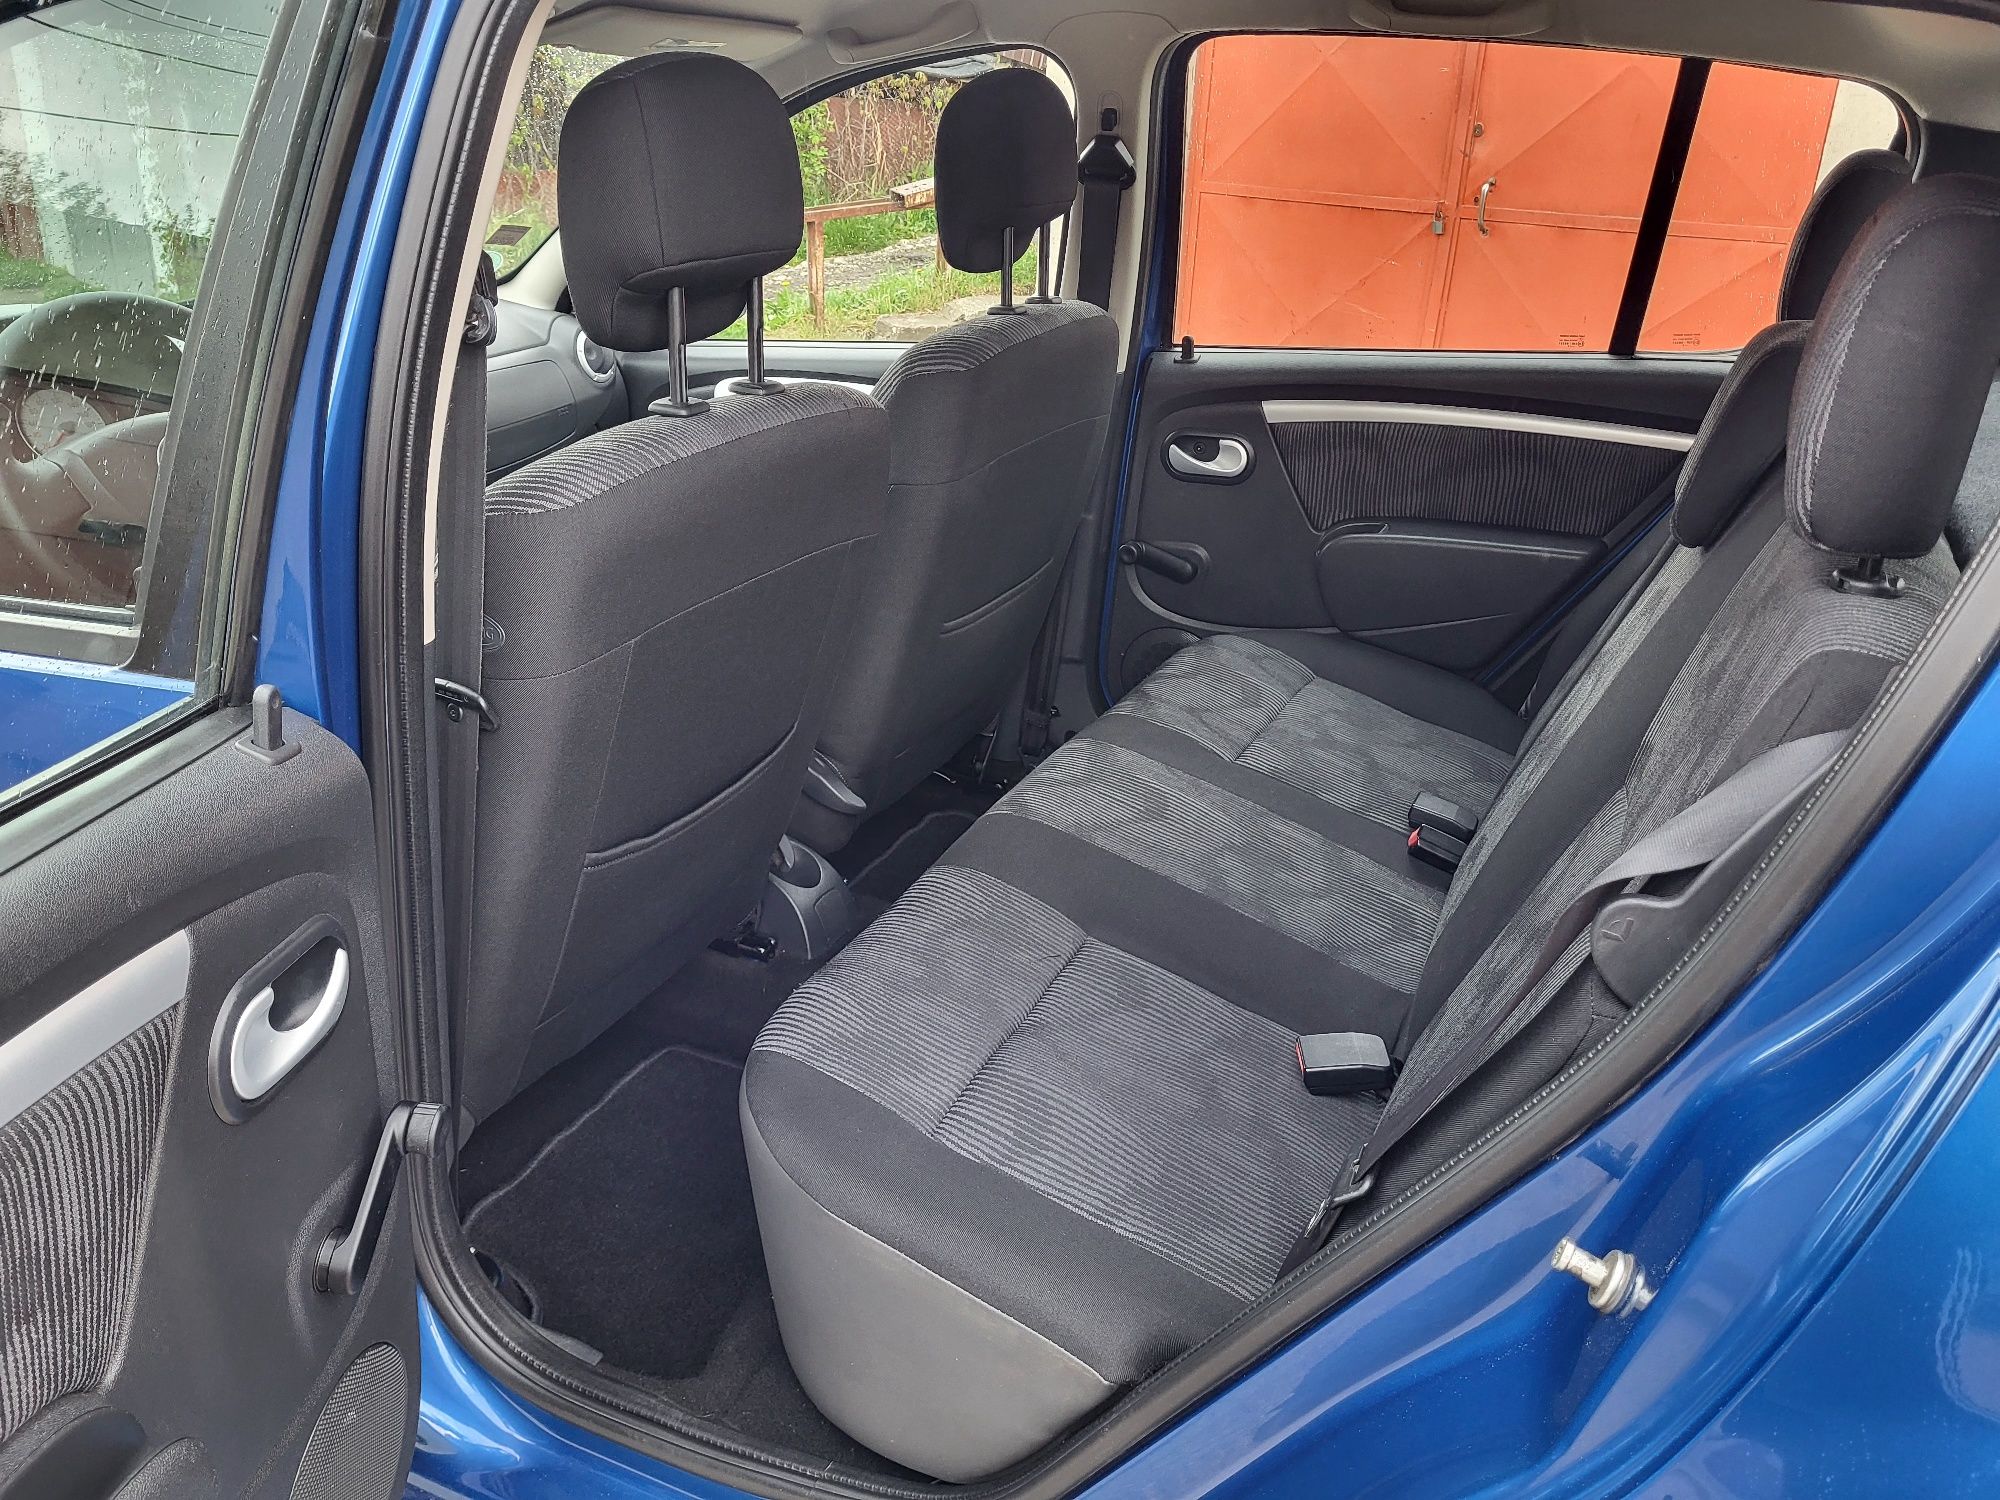 Dacia Sandero Laureate 1.6 Mpi 
1.6 Benzina 90 cp 
Euro 4  
Aer cond